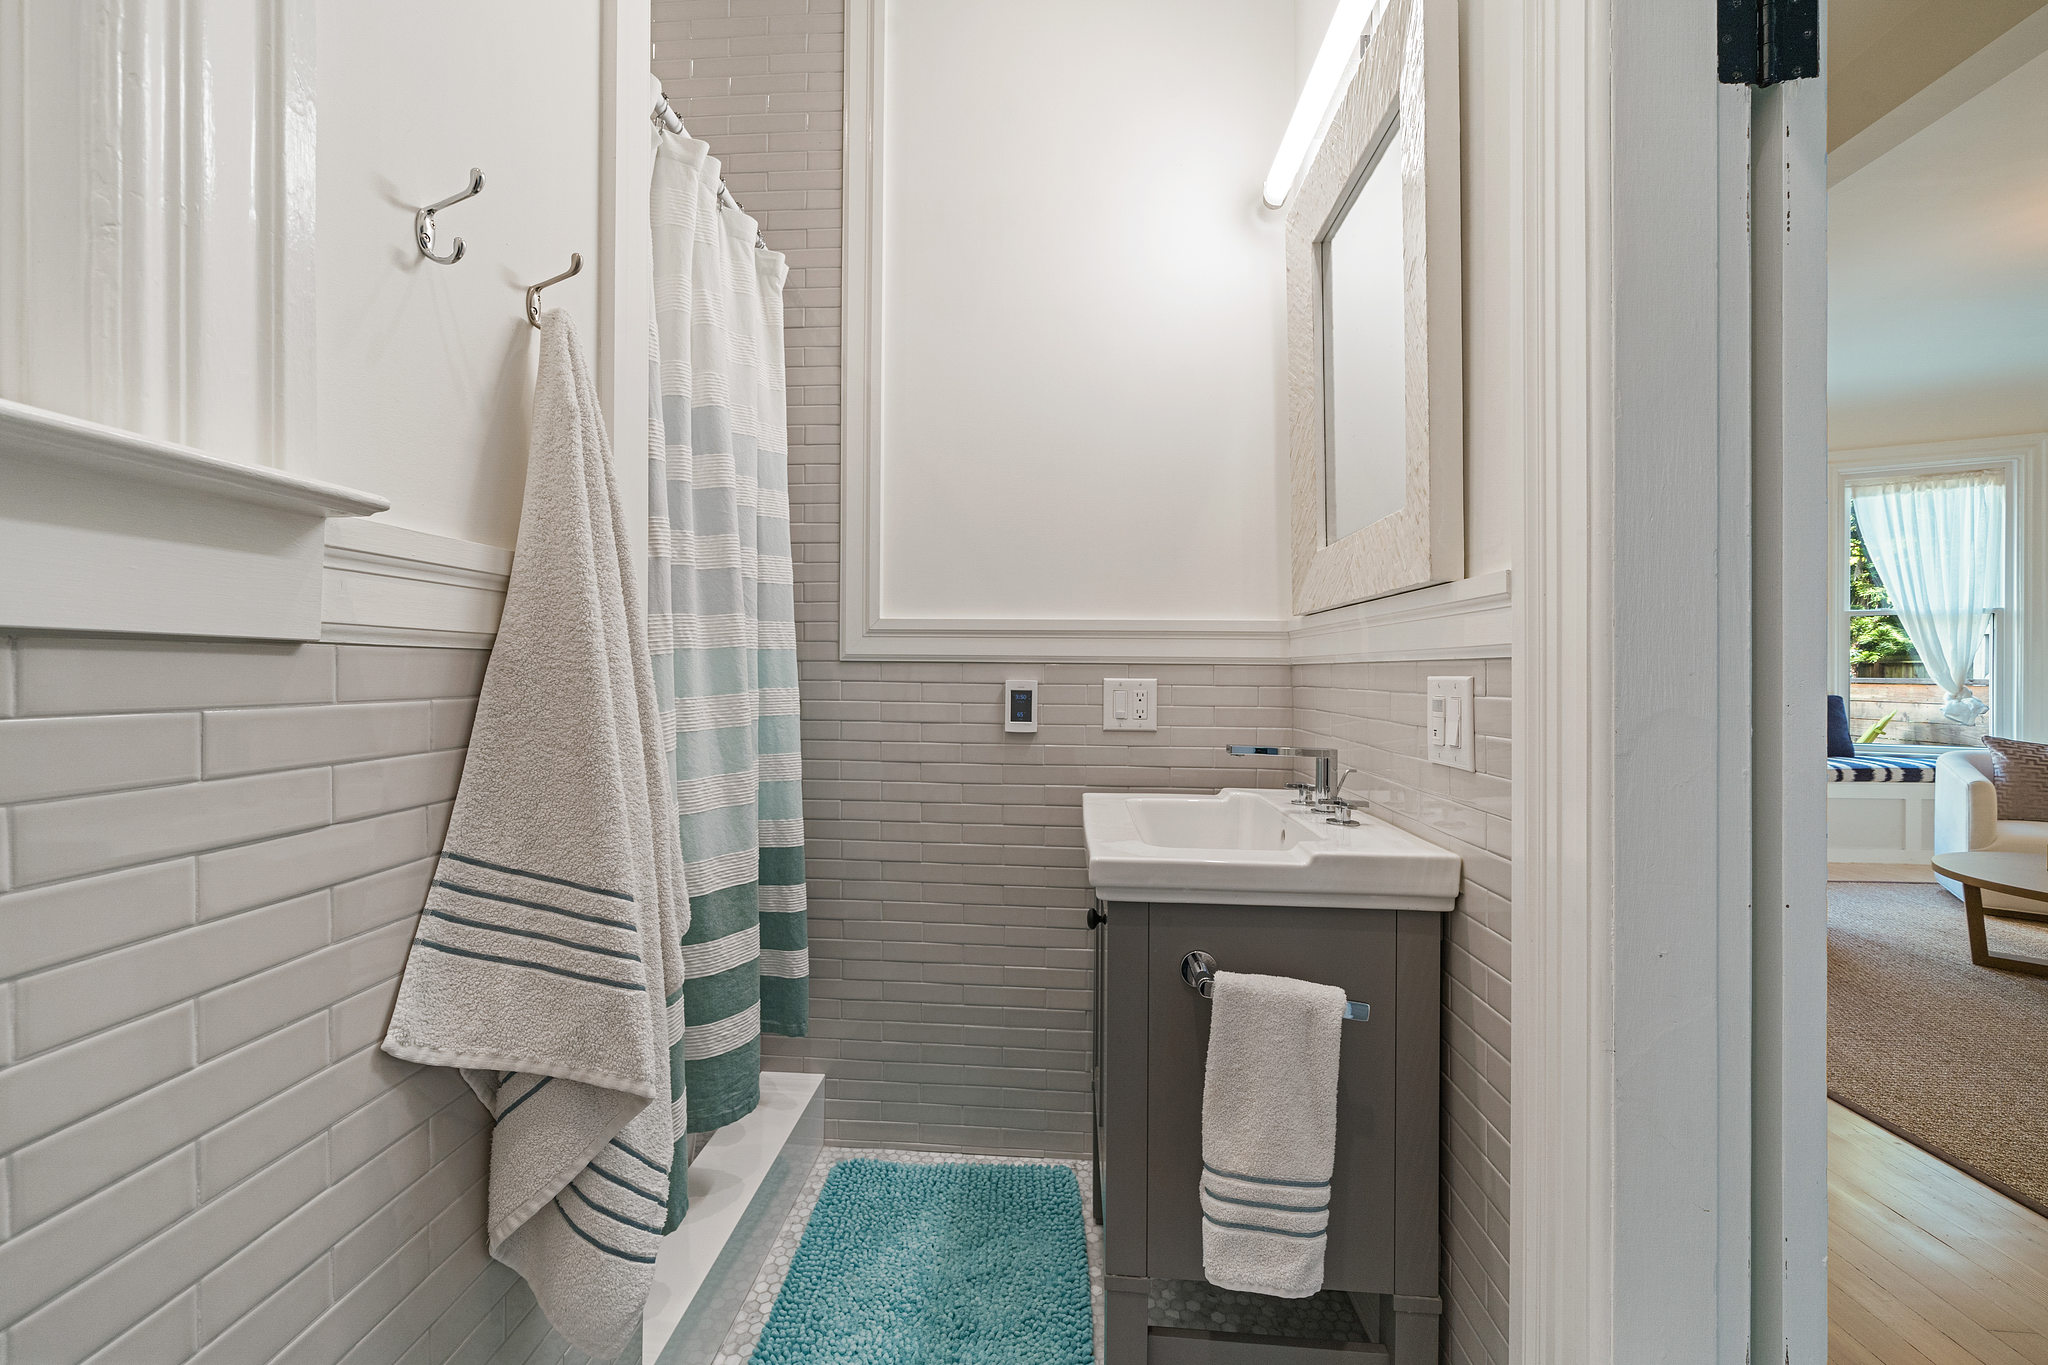 Property Photo: Bathroom with light grey tile